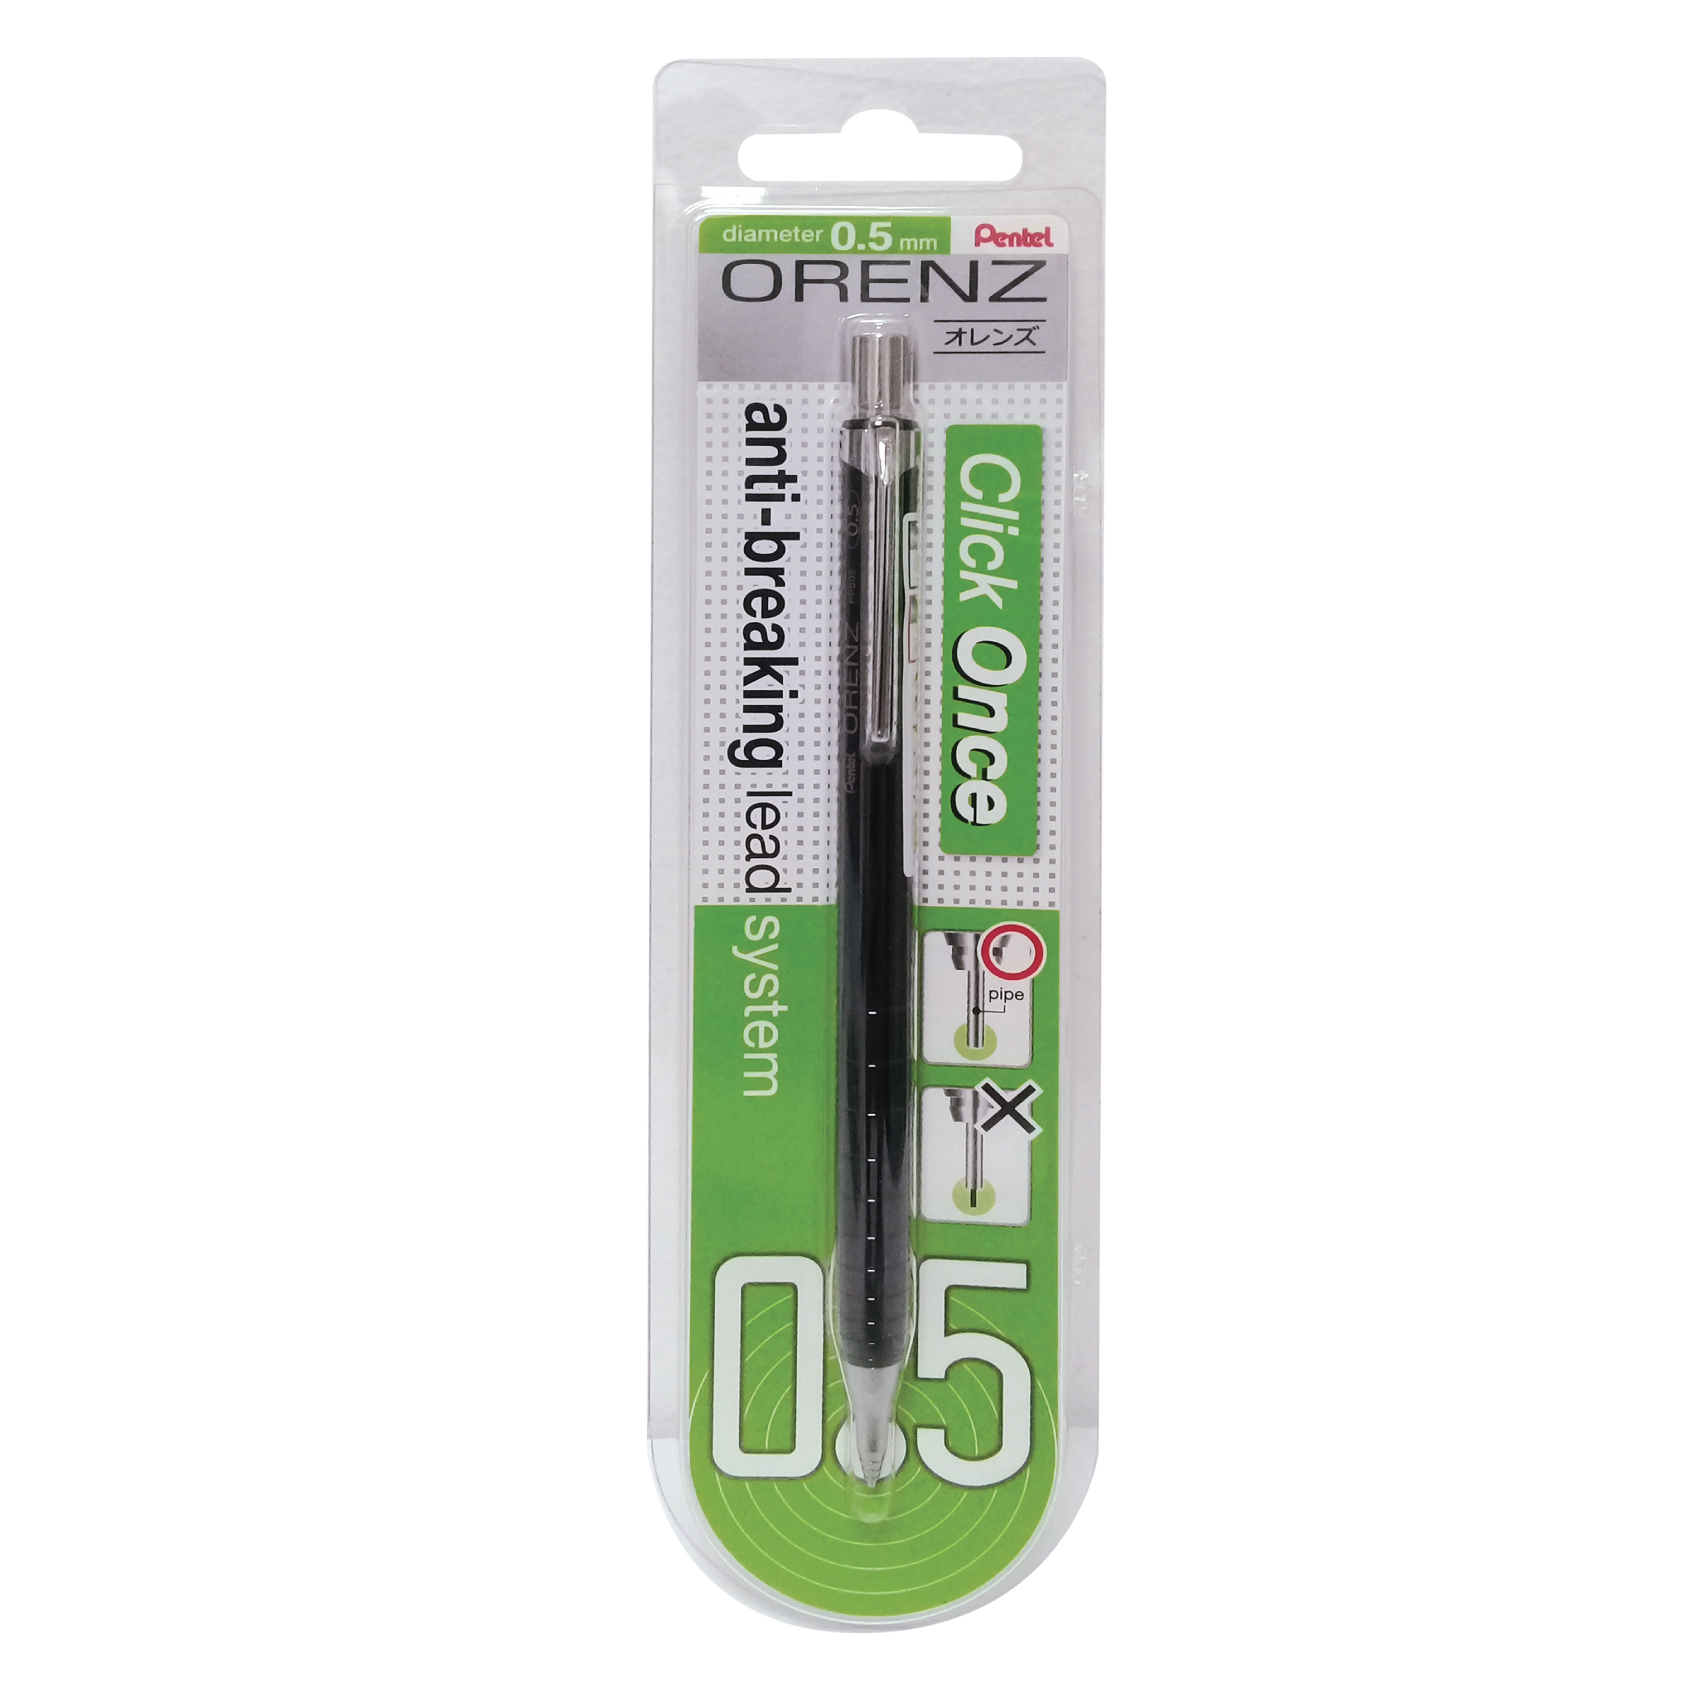 M.Pencil Orenz 0.5mm Bk Bls=1 Pc